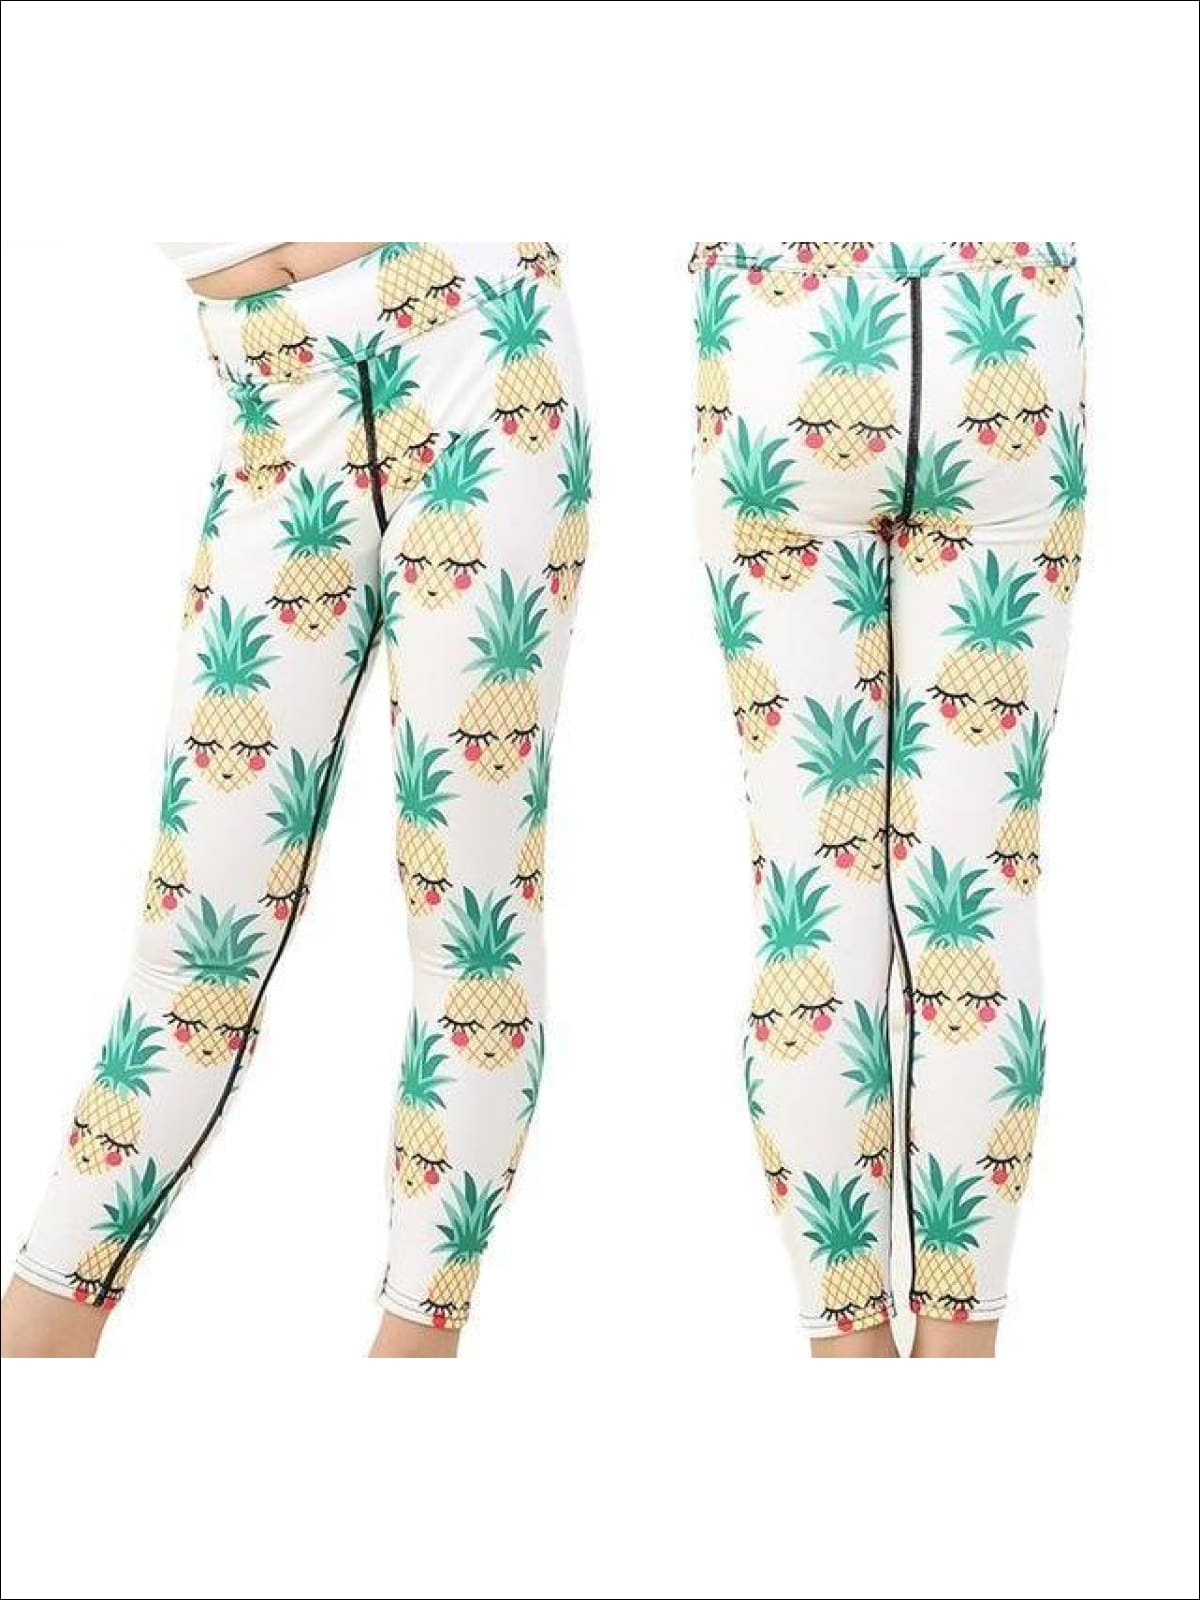 Girls Striped Unicorn Leggings (11 Style Options) - Pineapples / 4T - 5Y / Similar to image - Yoga Pants